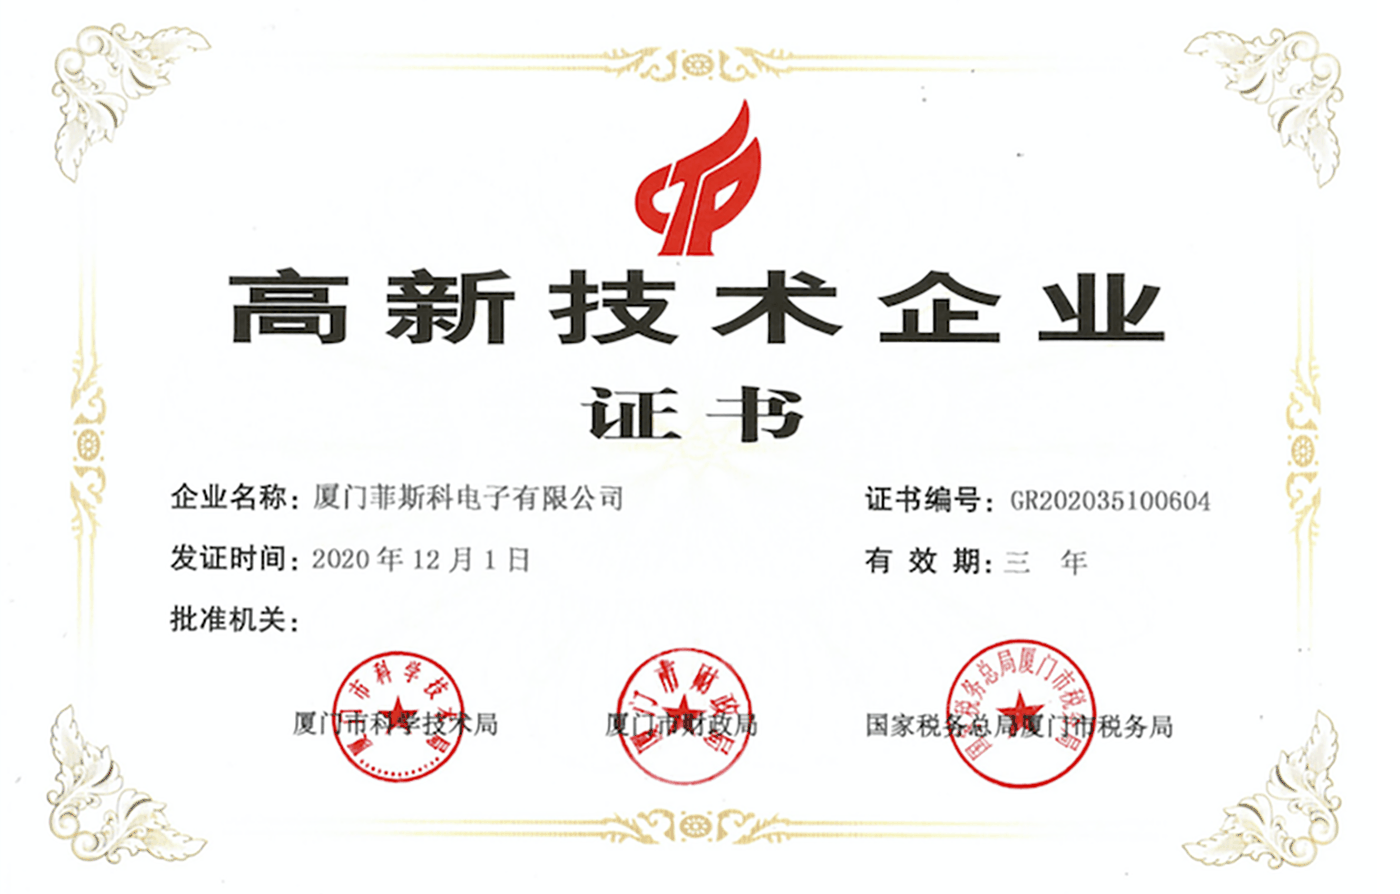 Certificado de alta tecnologia enterprise.png